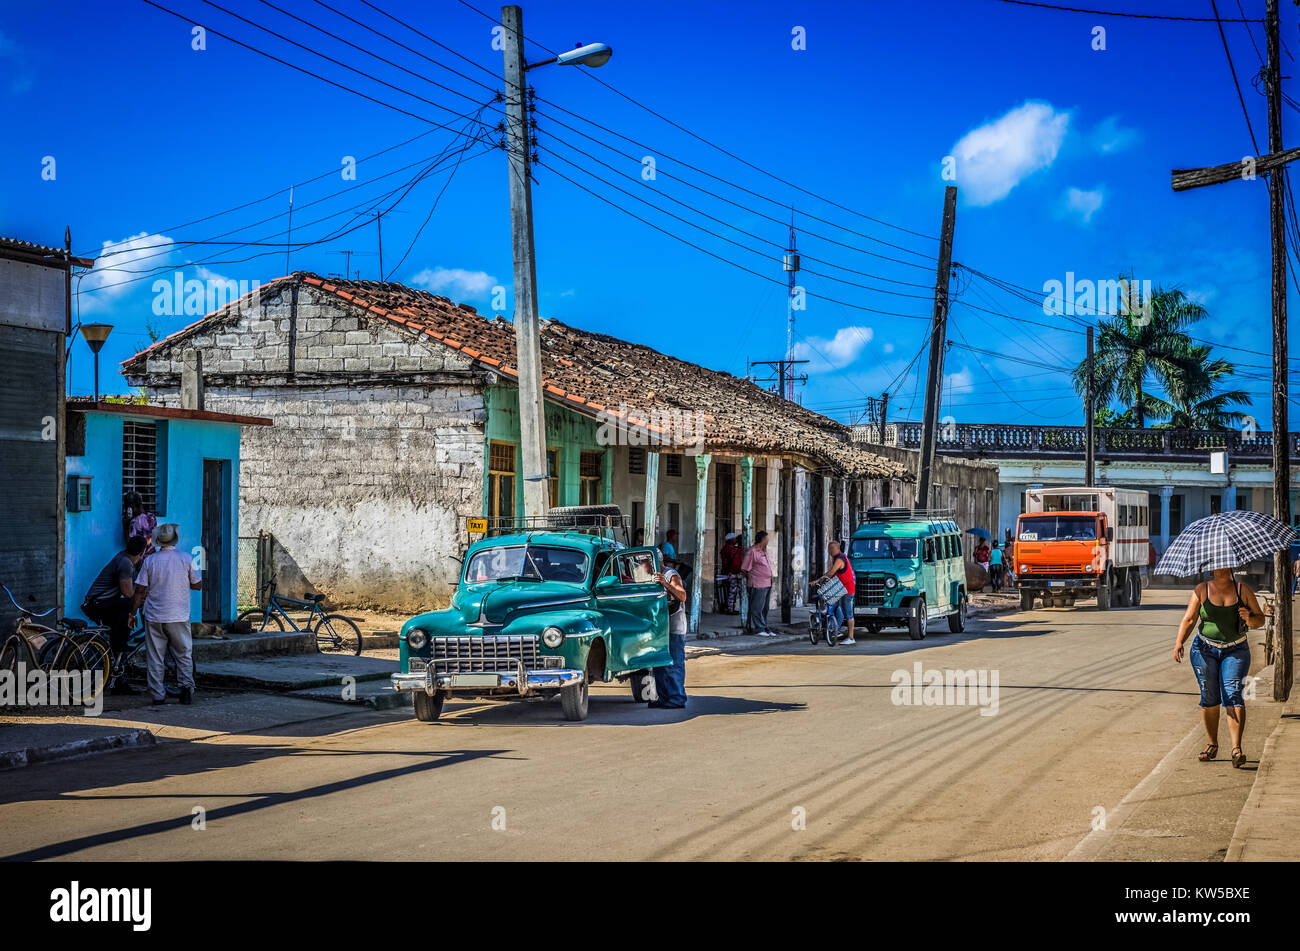 Straßenszene in Santa Clara Kuba mit einem parkendem blauen Chevrolet Oldtimer - Serie Kuba 2016 Reportage Stock Photo